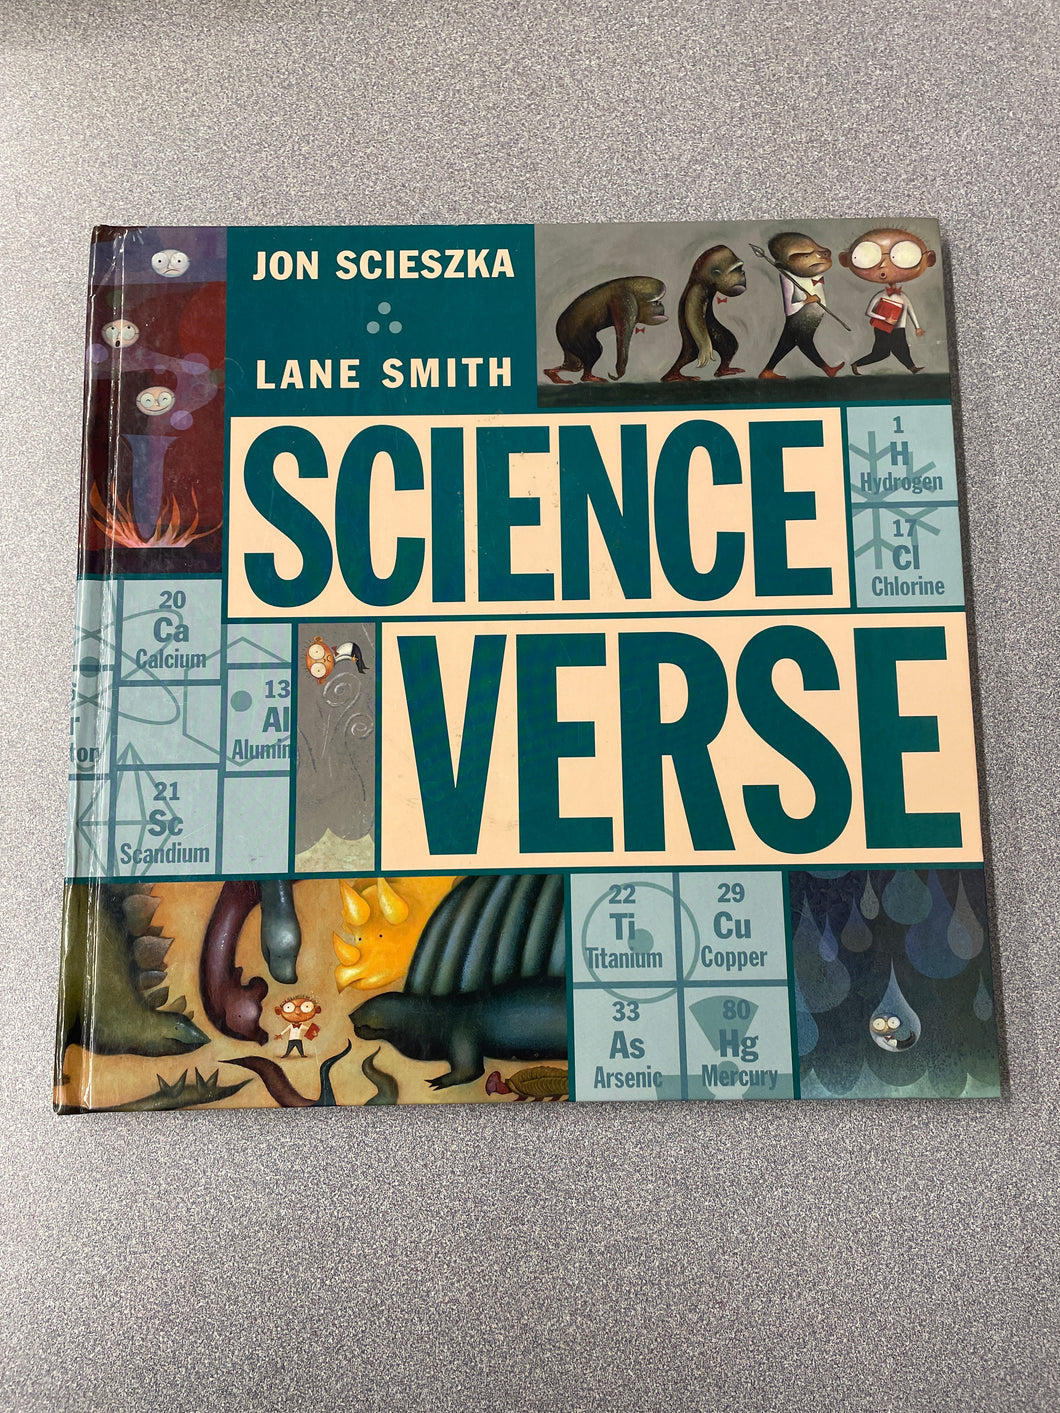 Science Verse, Scieszka and Lane Smith [2004] CN 2/24